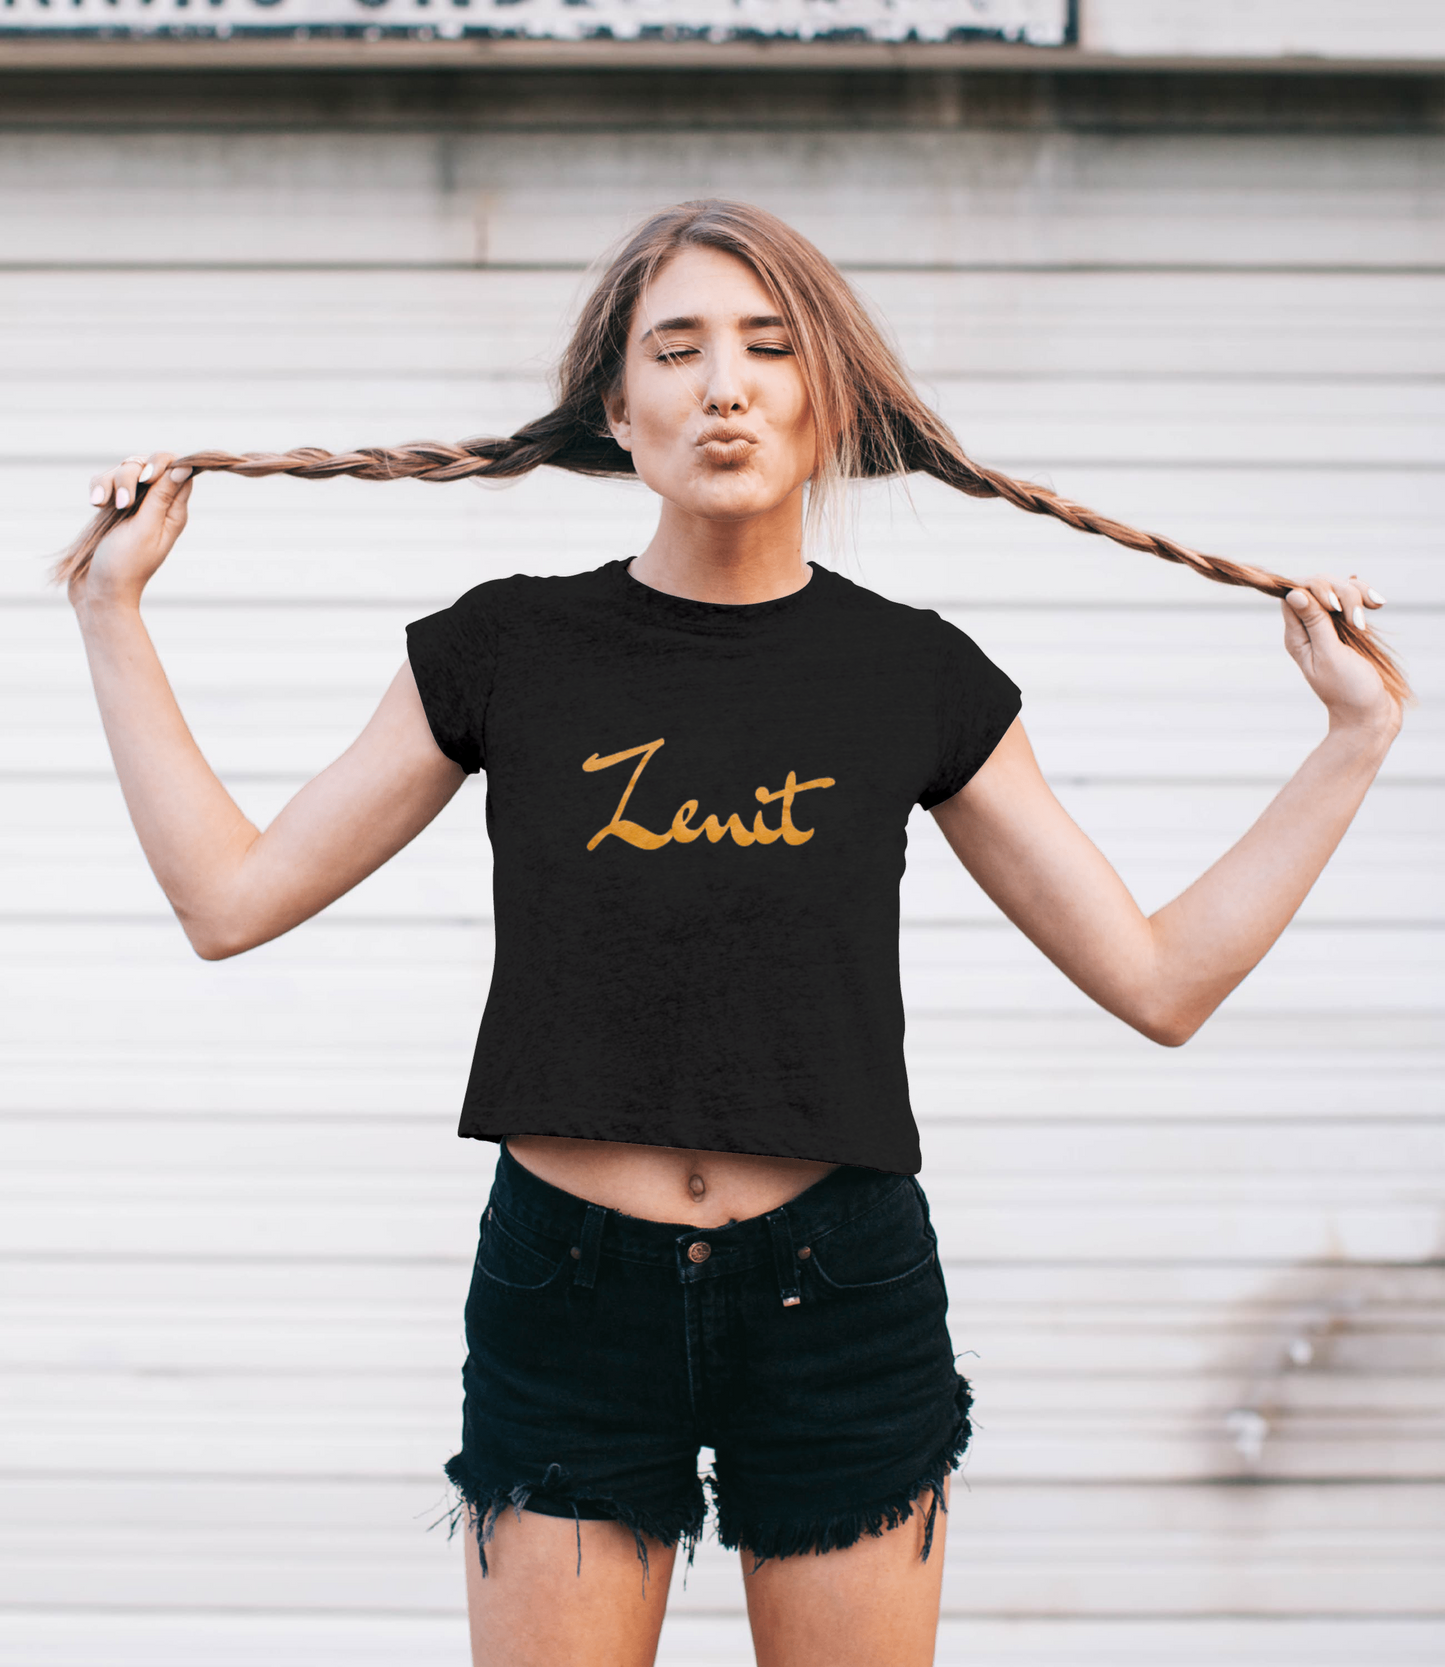 Zenit Syma Graphic Shirt